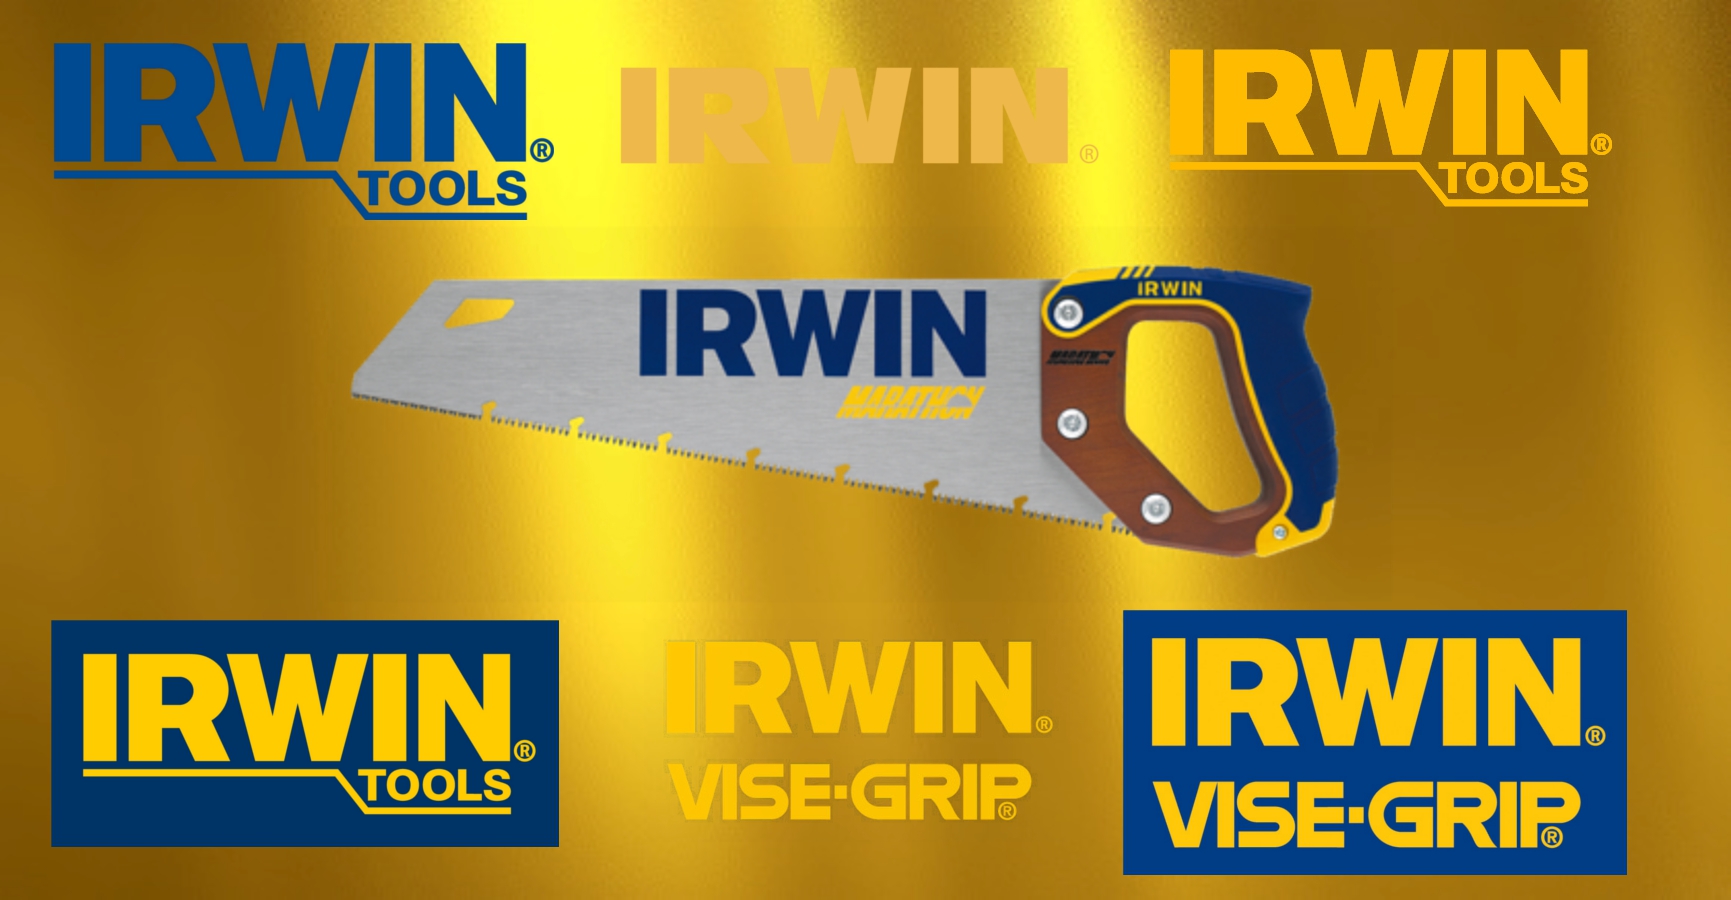 Irwin logos.jpg